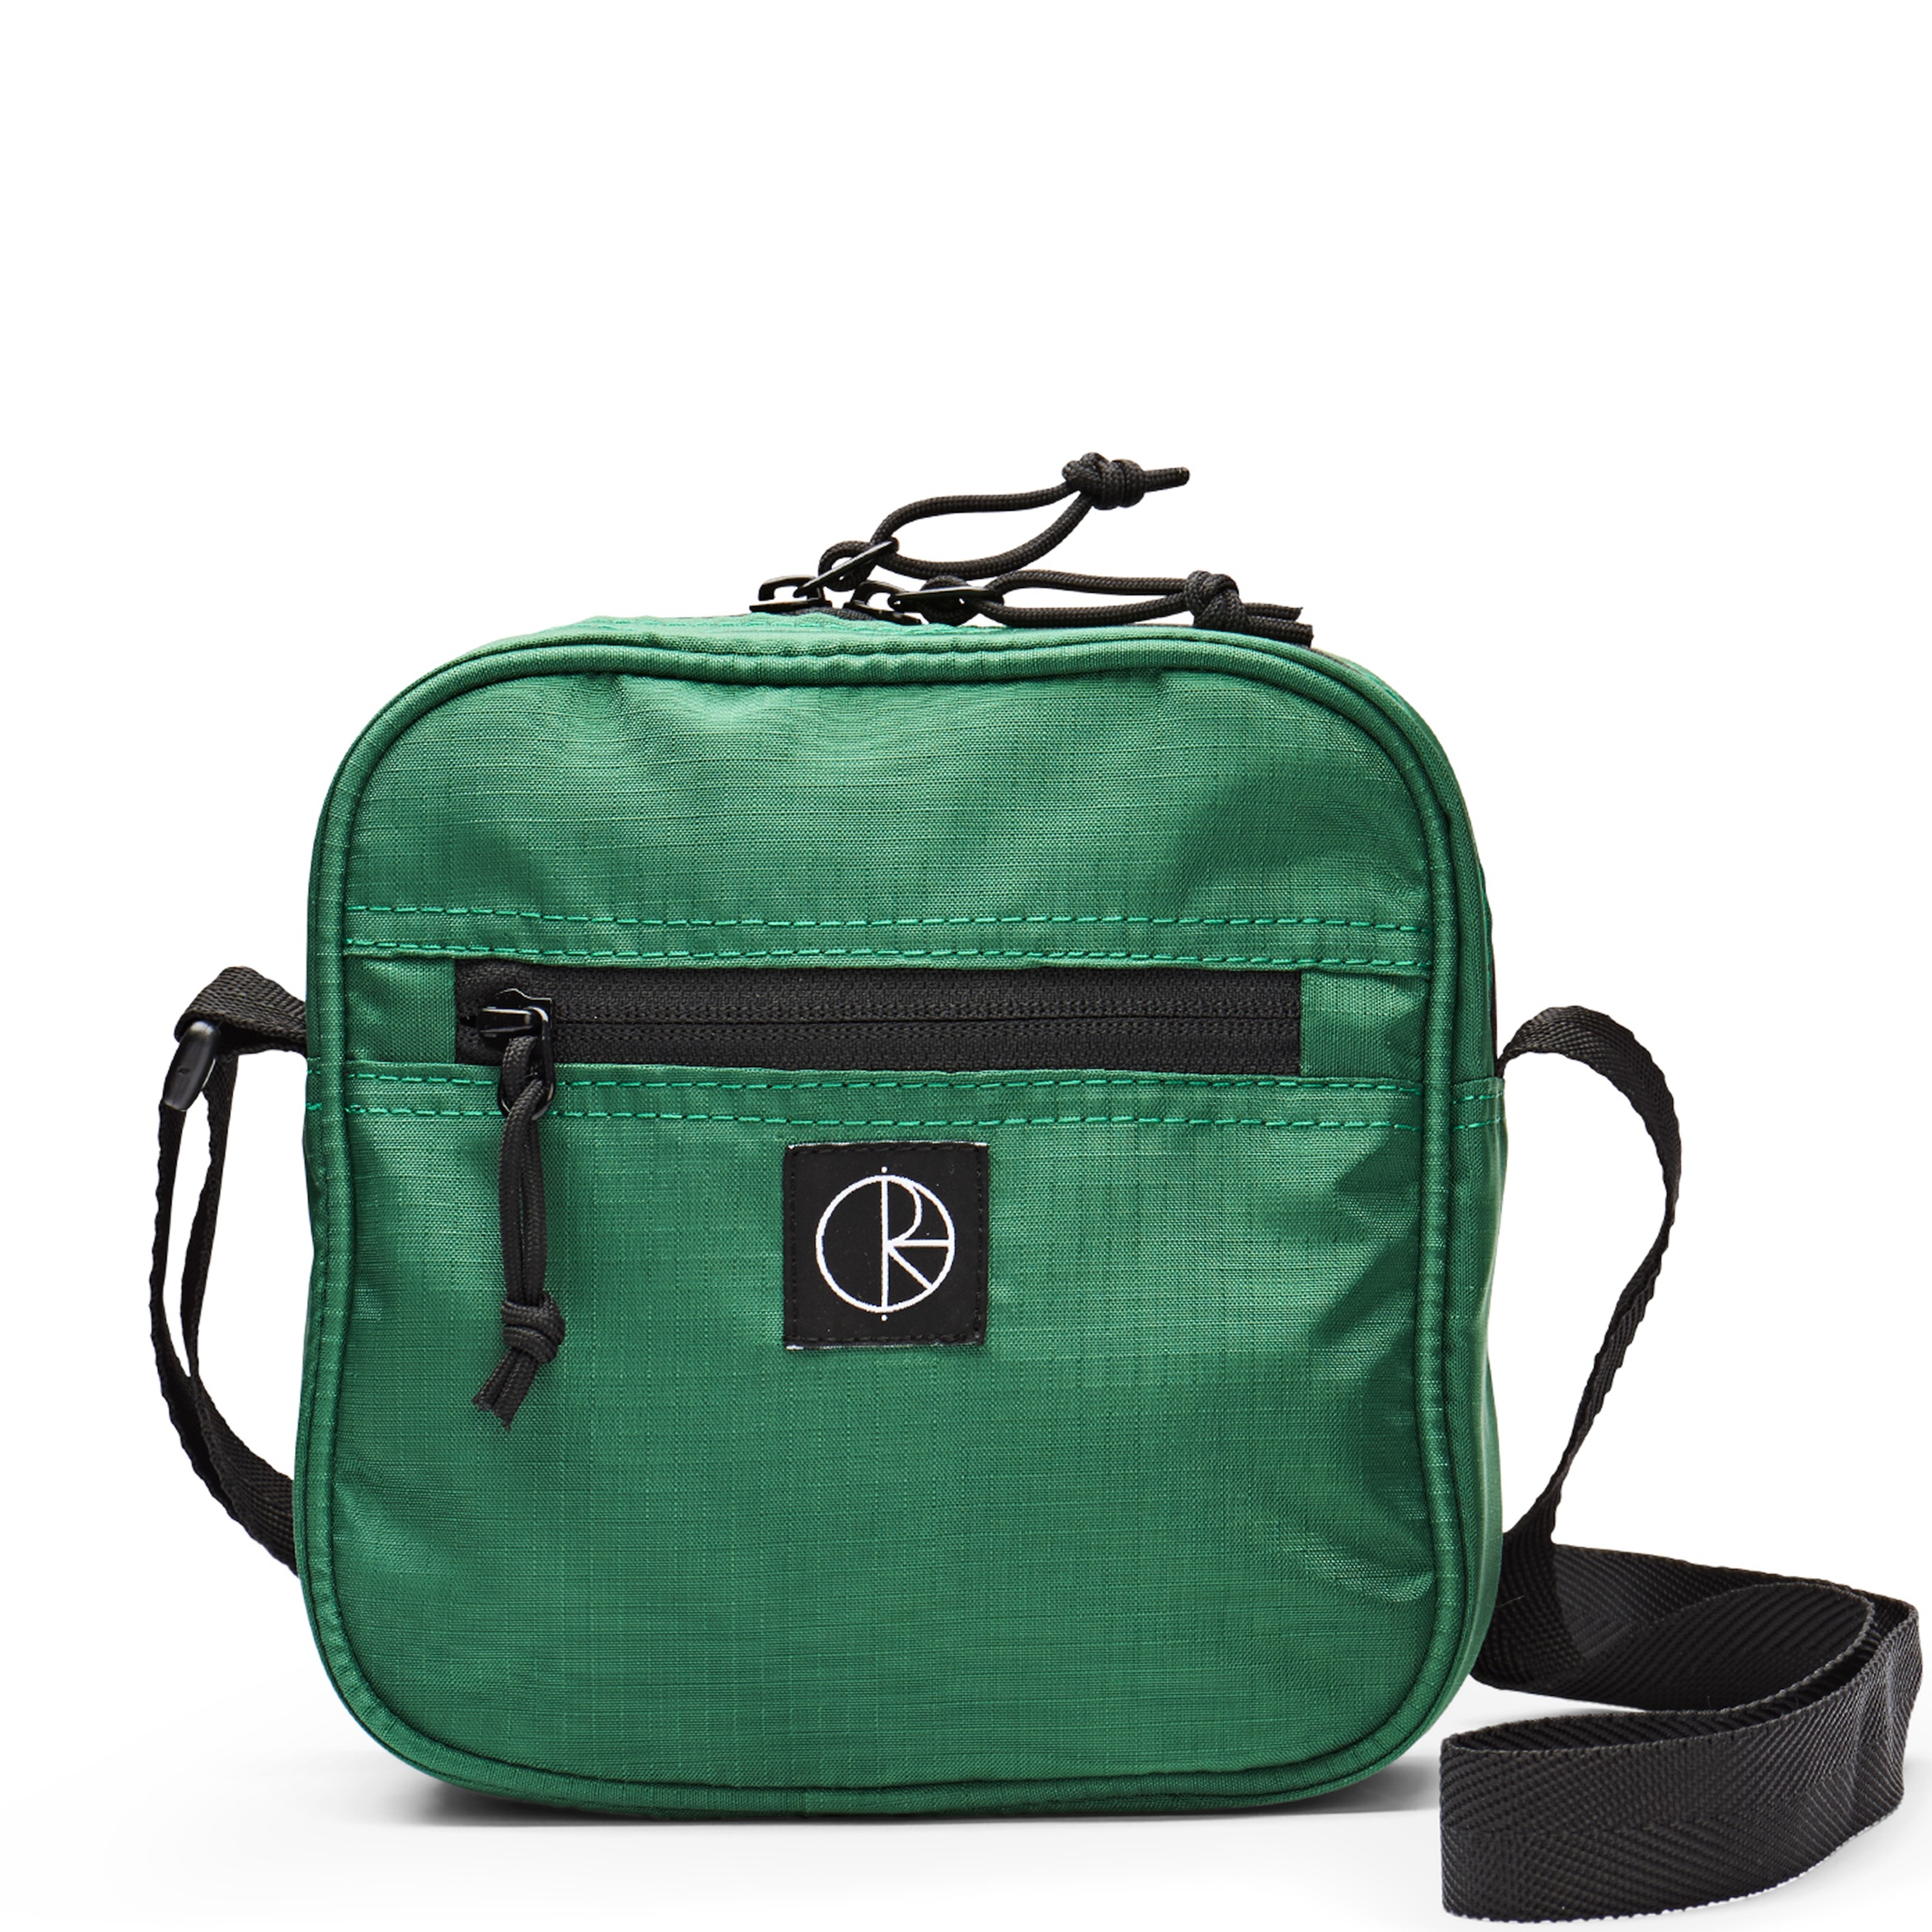 Polar Skate Co. Ripstop Dealer Bag (Green) - Consortium.